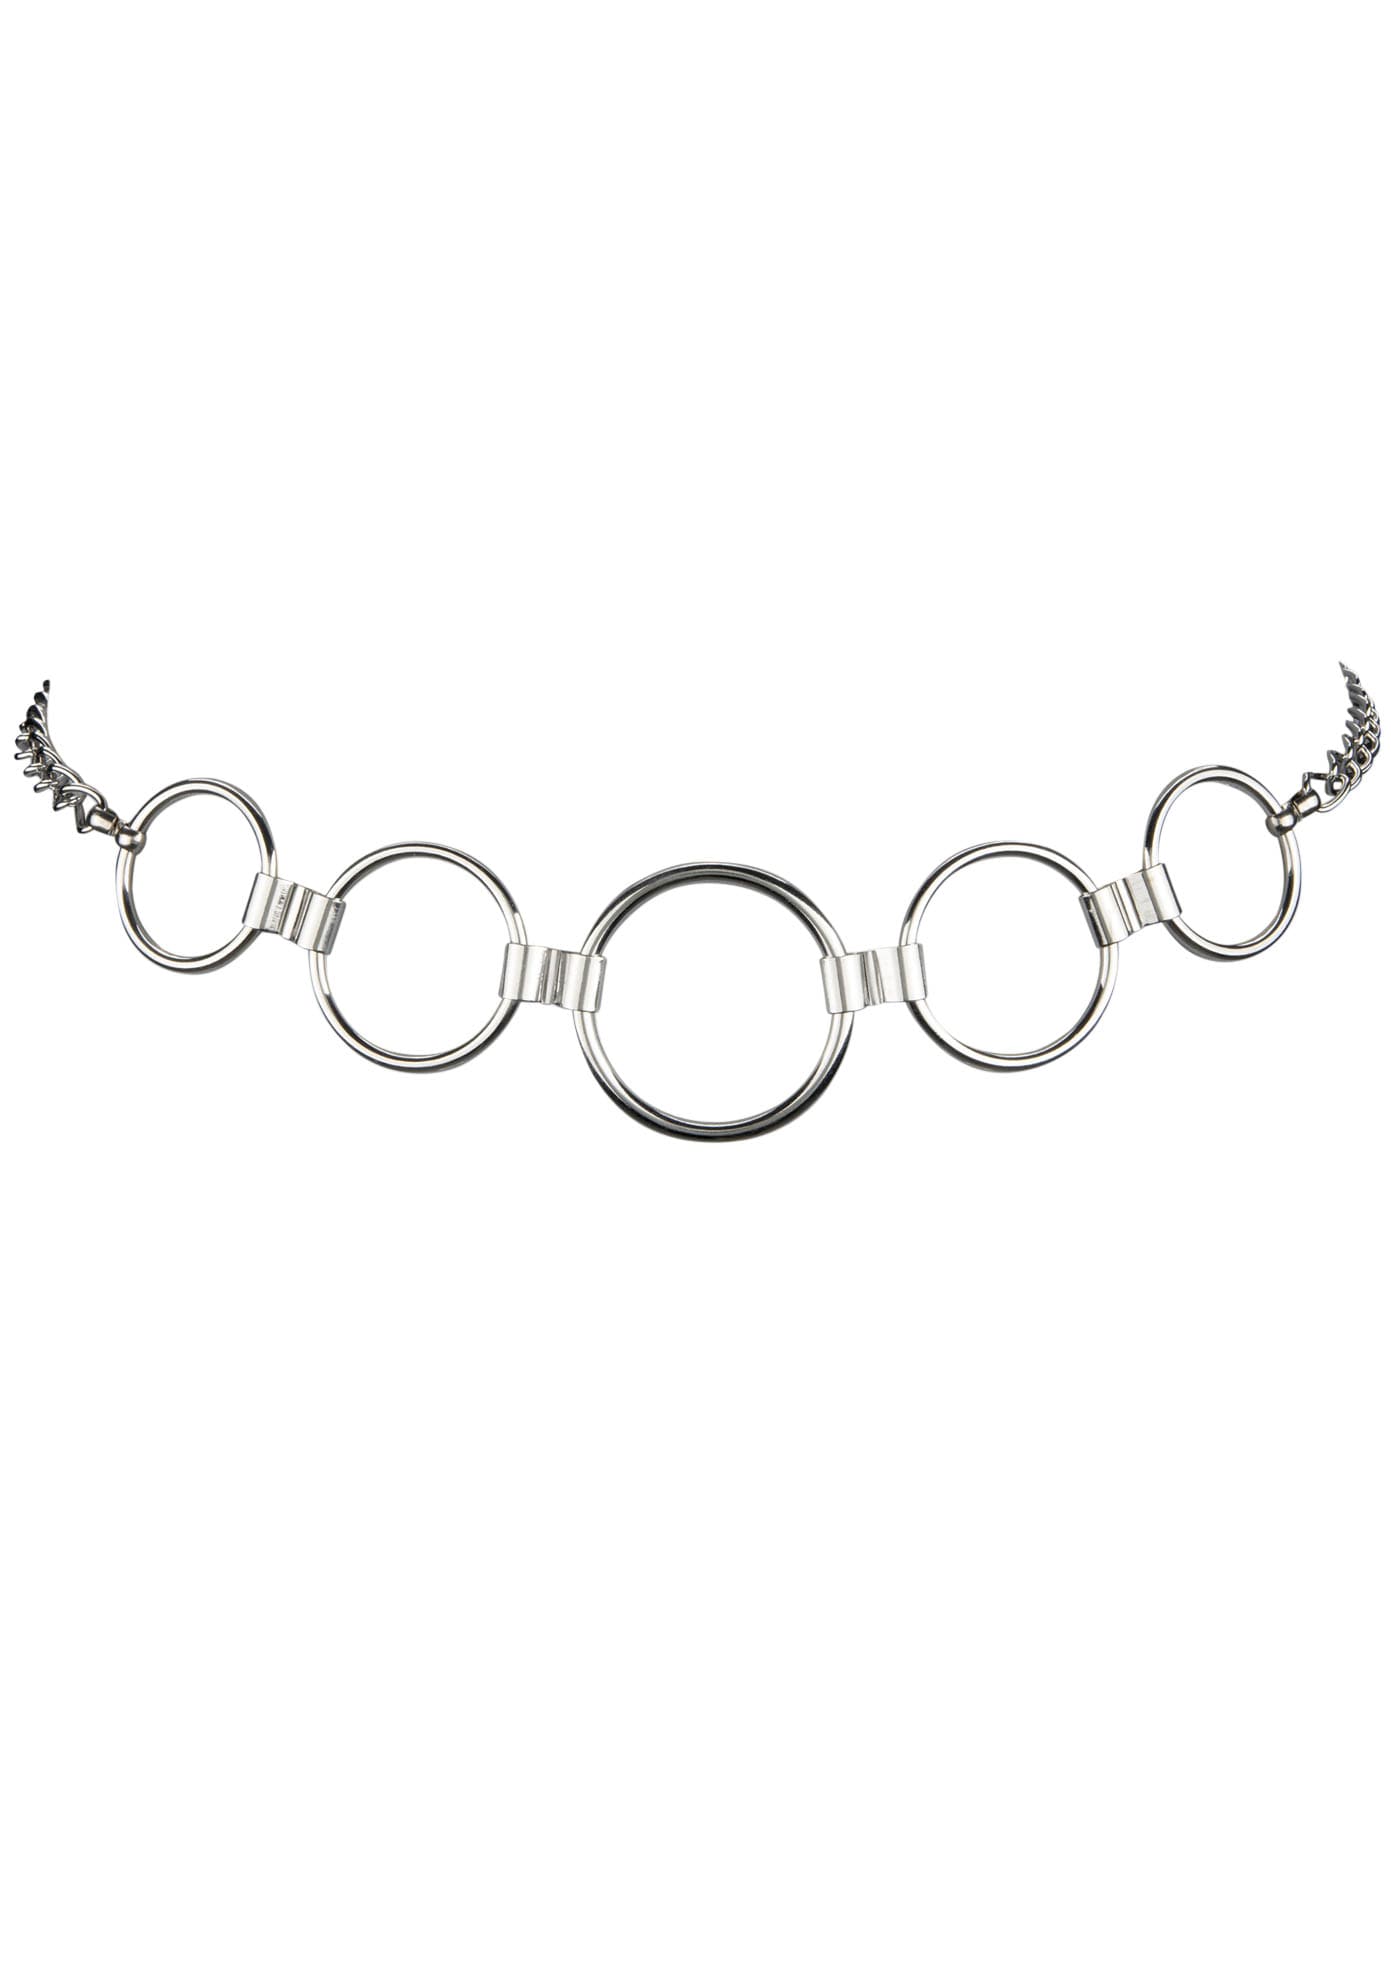 BERND GÖTZ Kettengürtel, in elegant abgestuftem Ringdesign